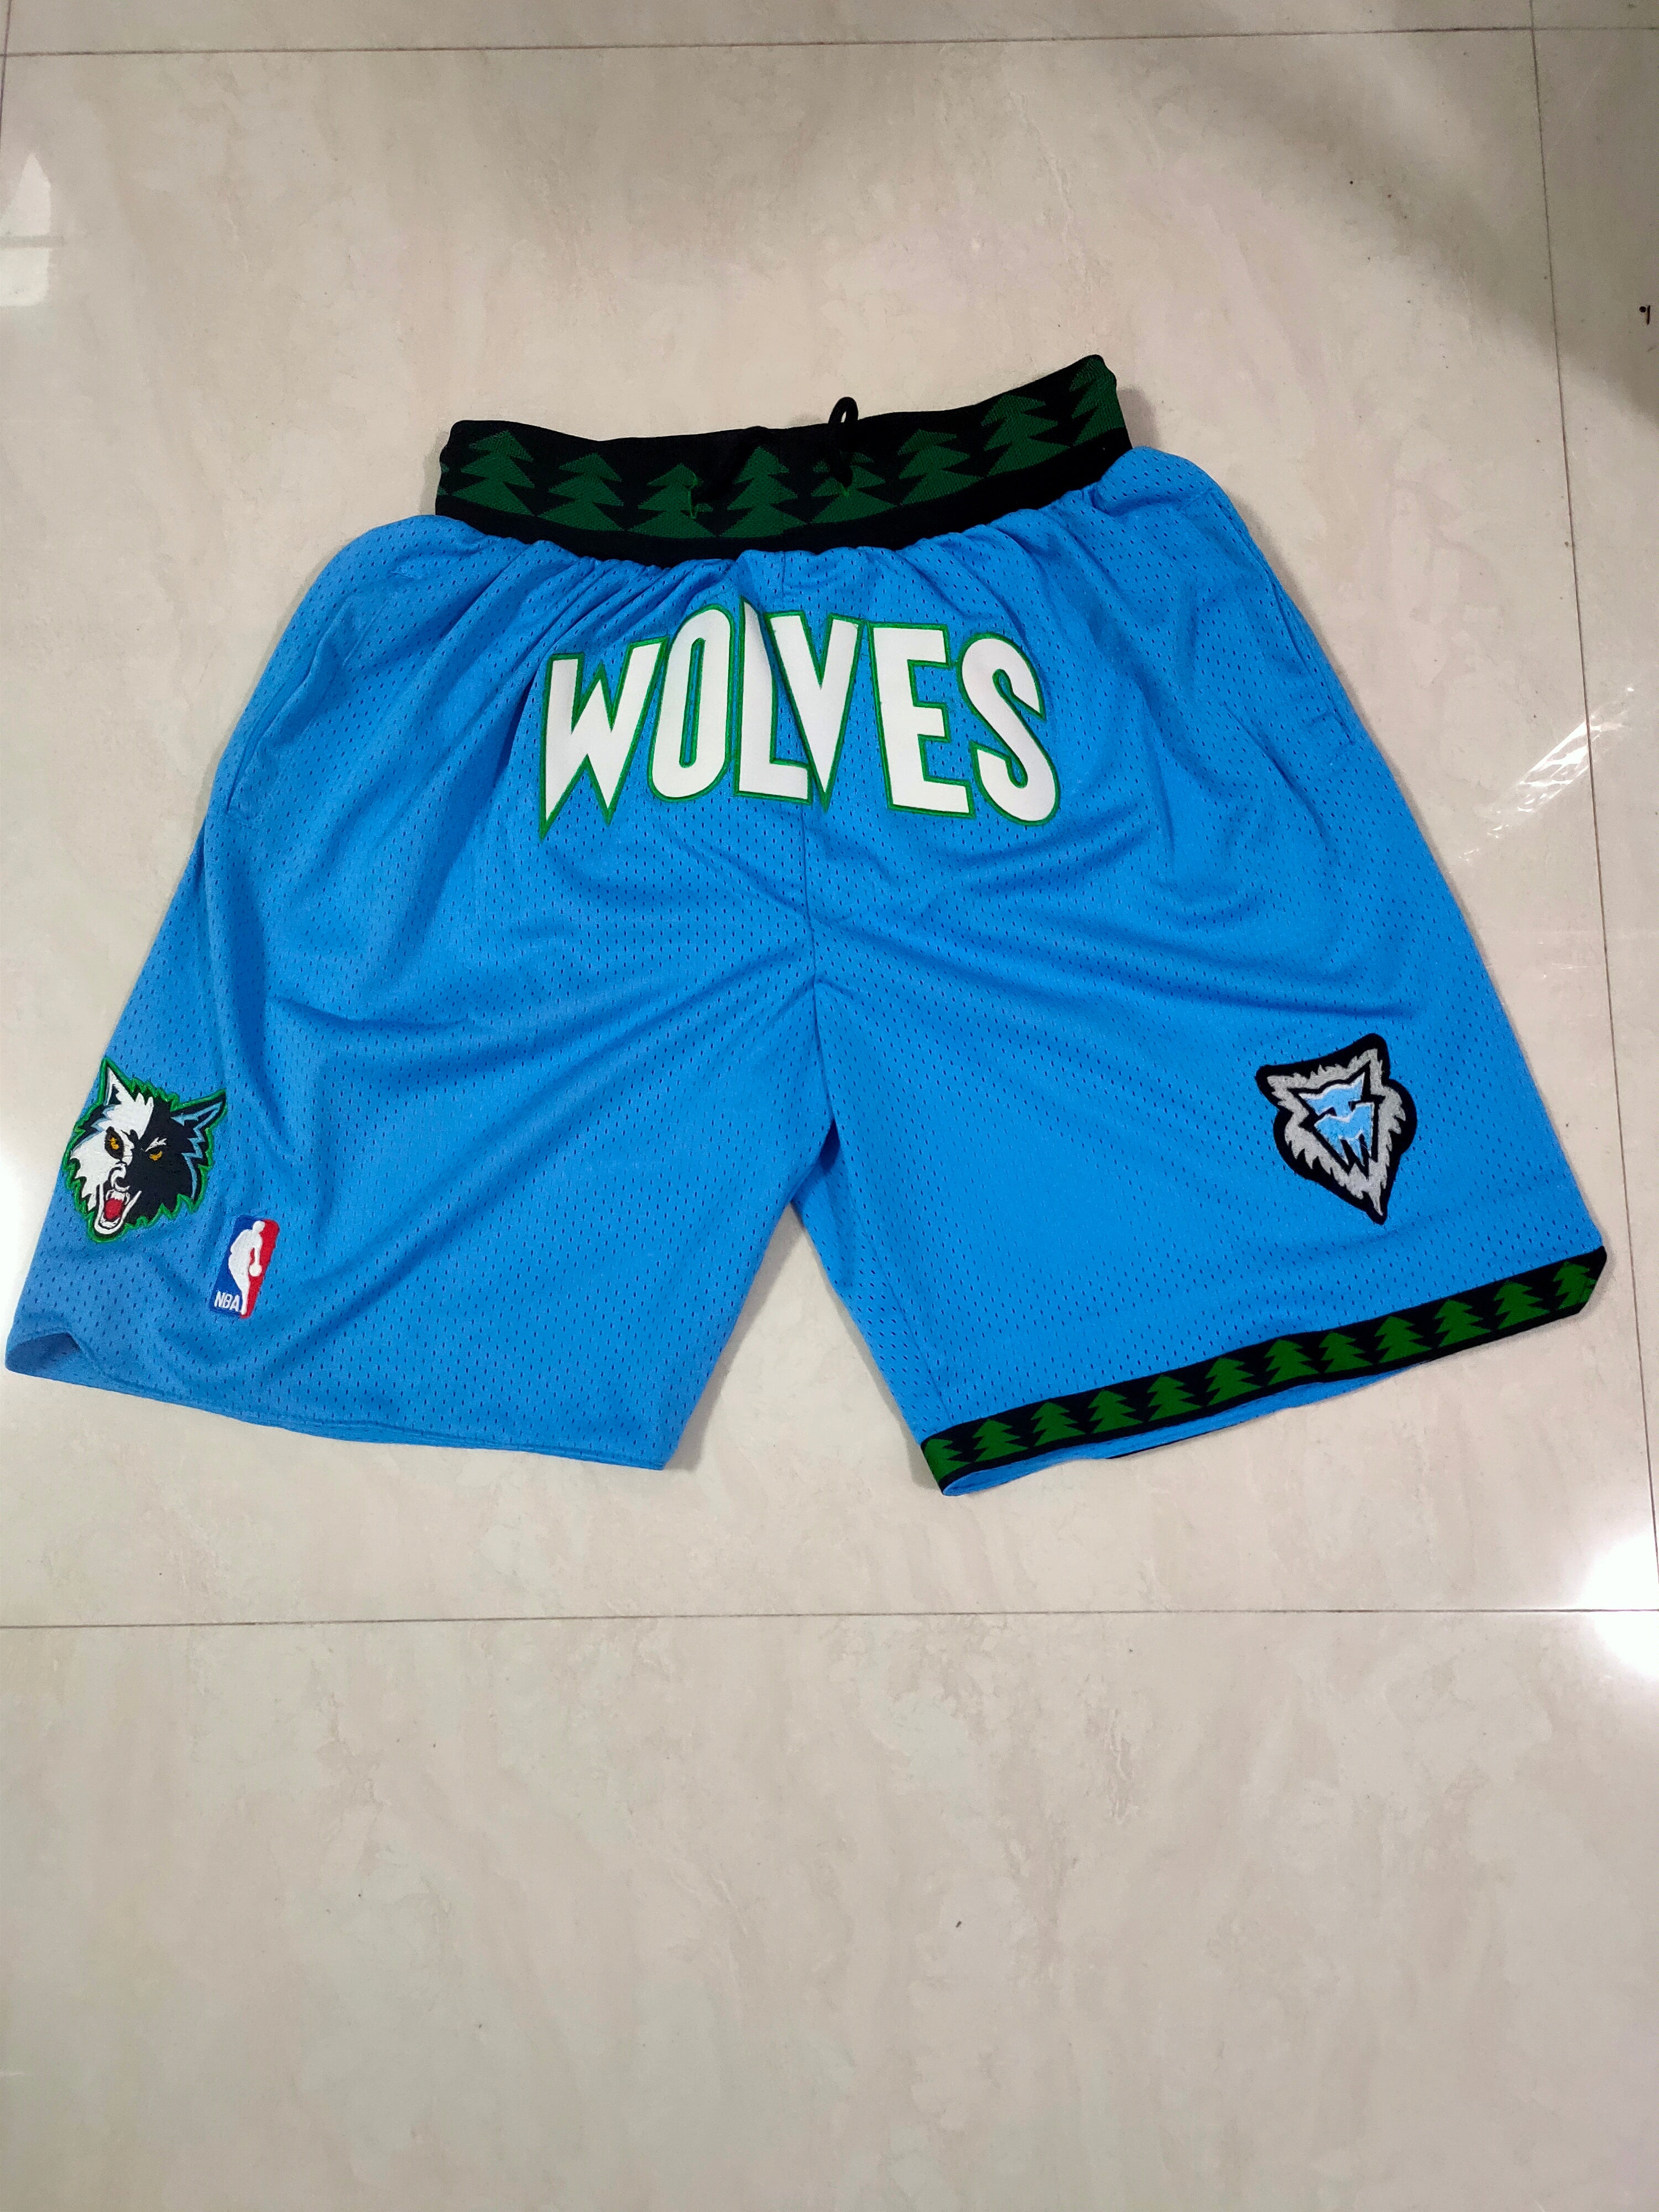 Wolves blue shorts